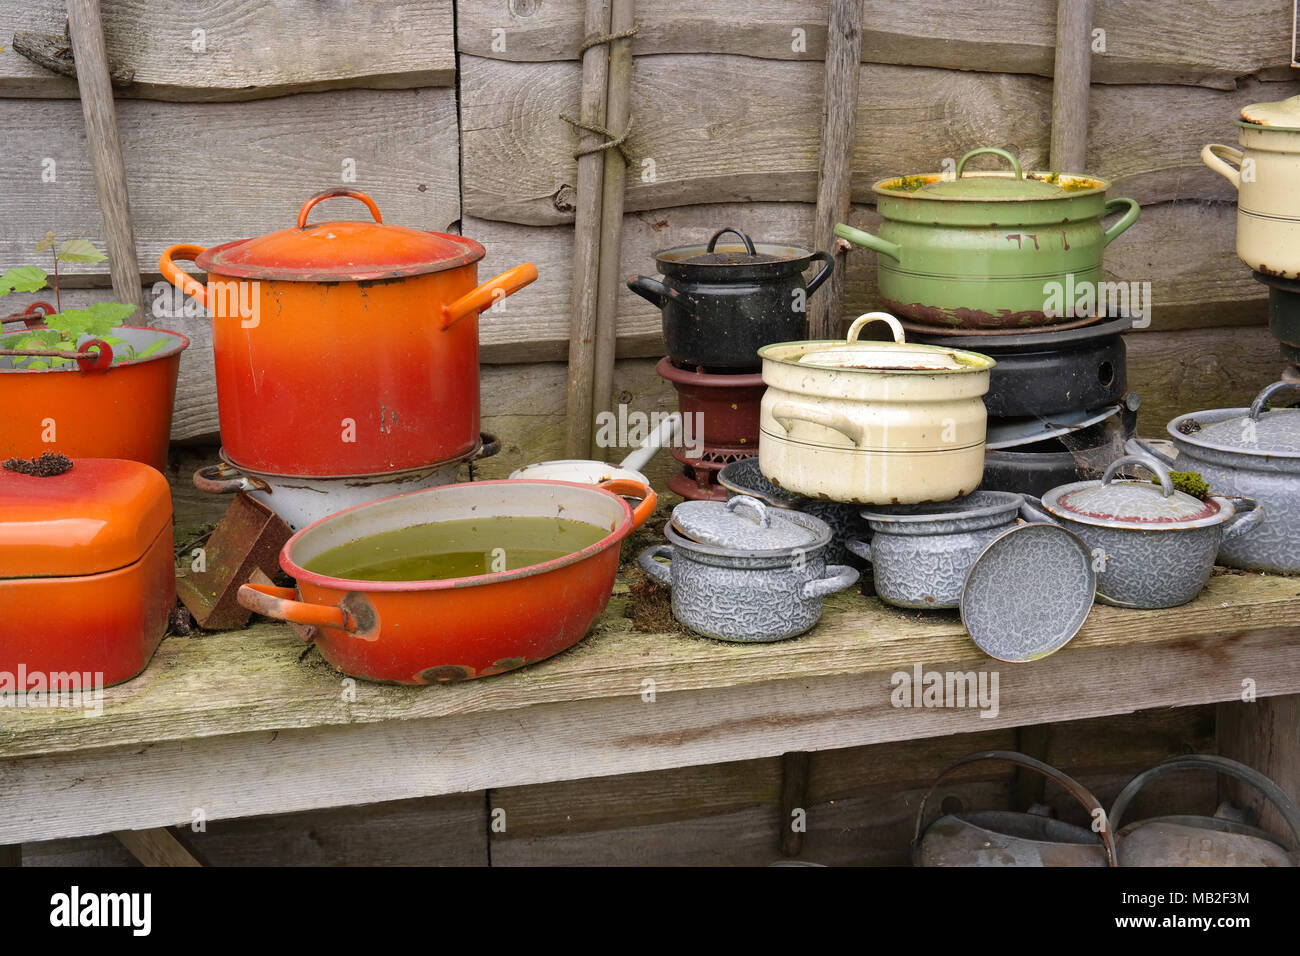 Vintage Enamel Oval Roaster, Roasting Pot, Casserole Pot, Cooking Pot,  Creamy Yellow and Green, Vintage Pots, Retro Pots, 1950s Kitcheneare 